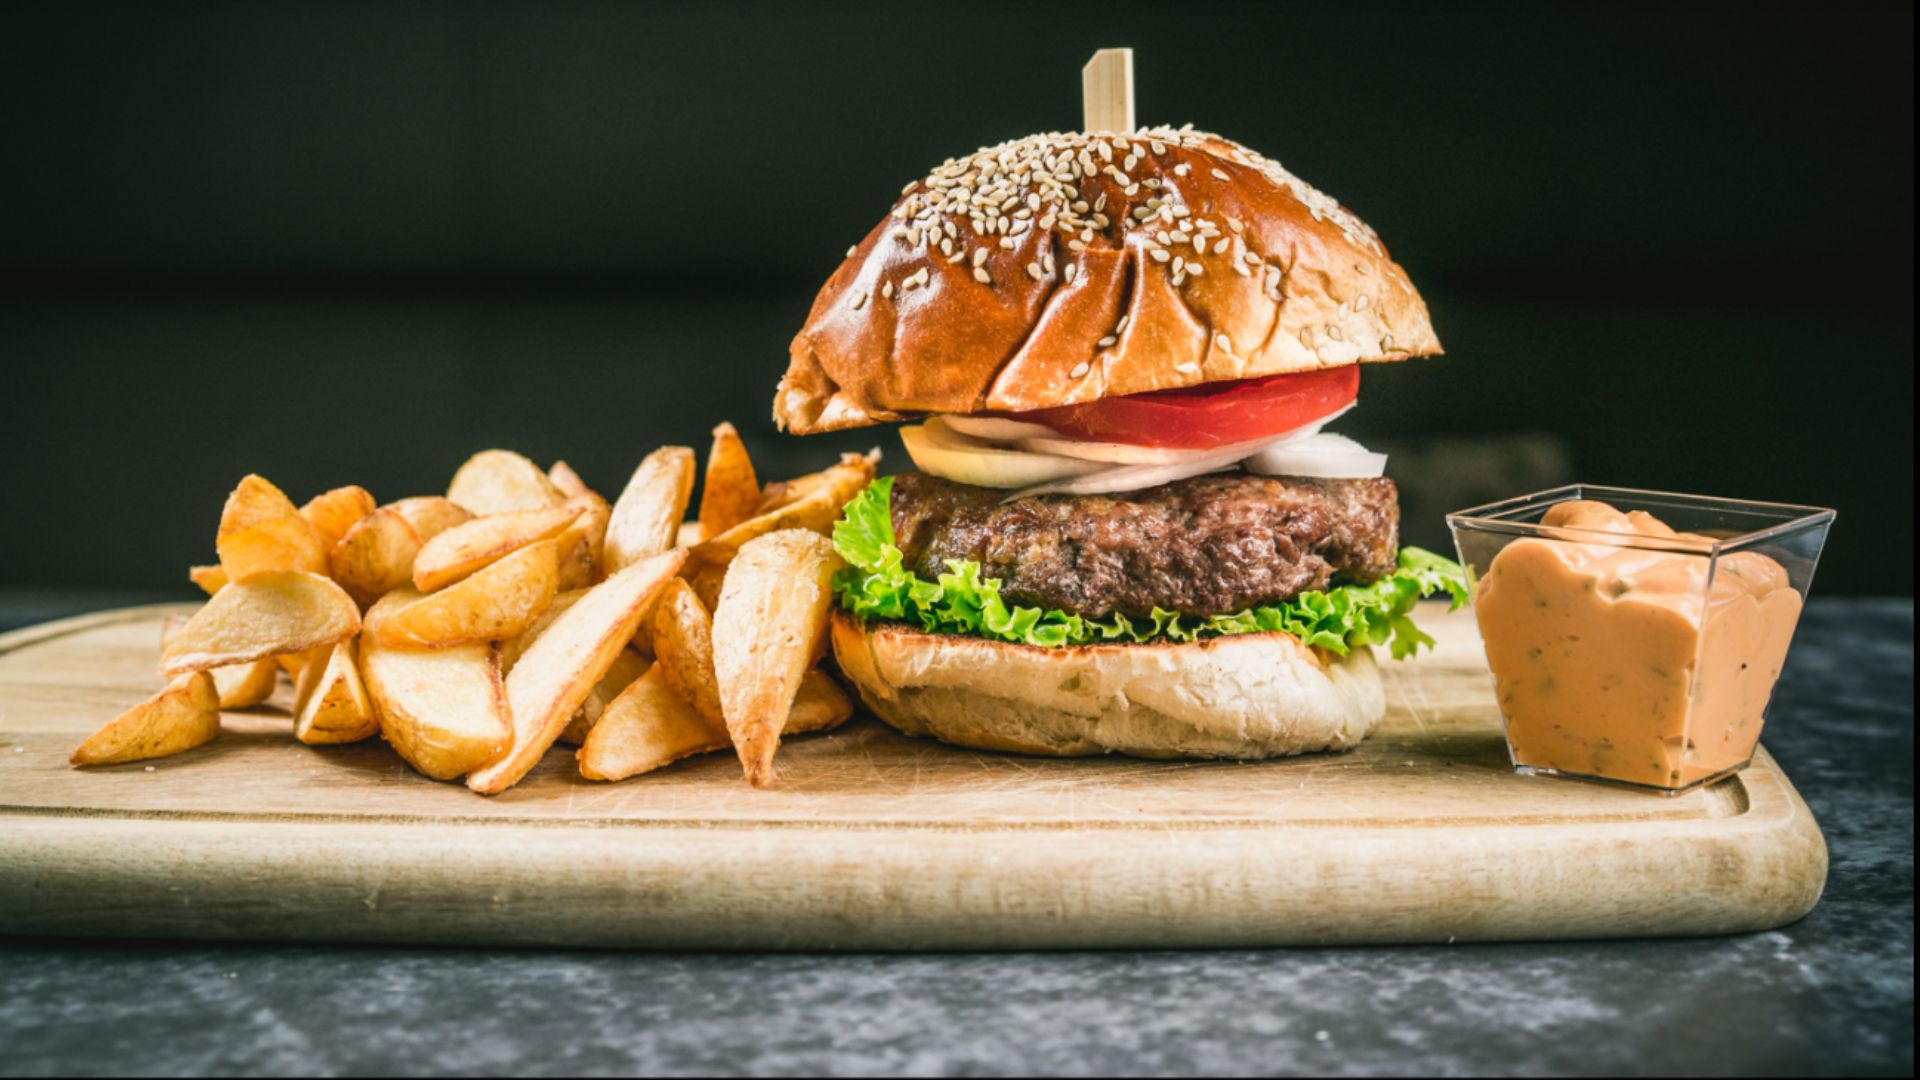 Gurmanski burger - American Steak and Grill House